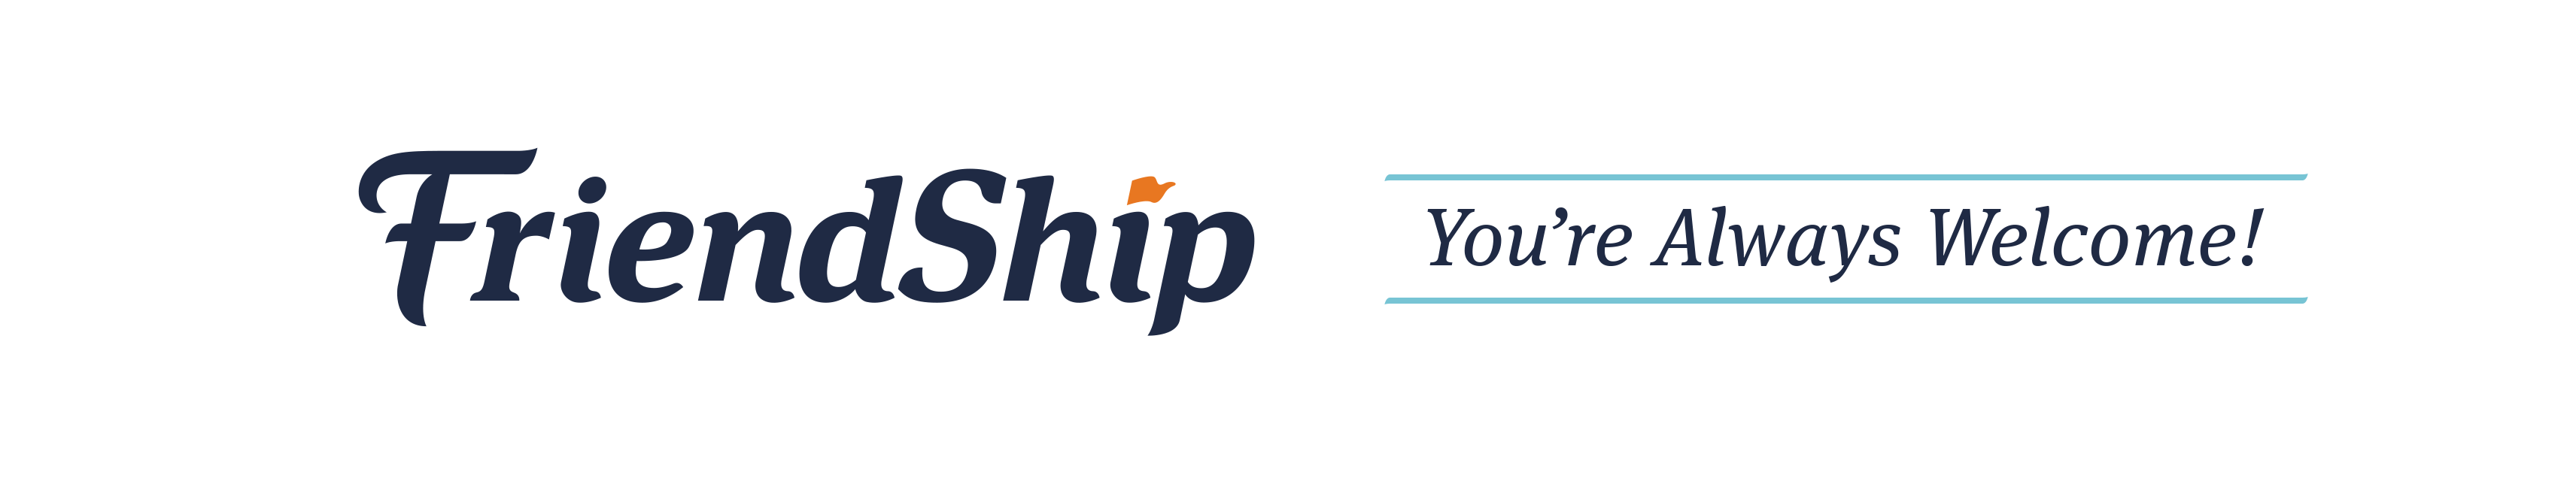 FriendShip logo